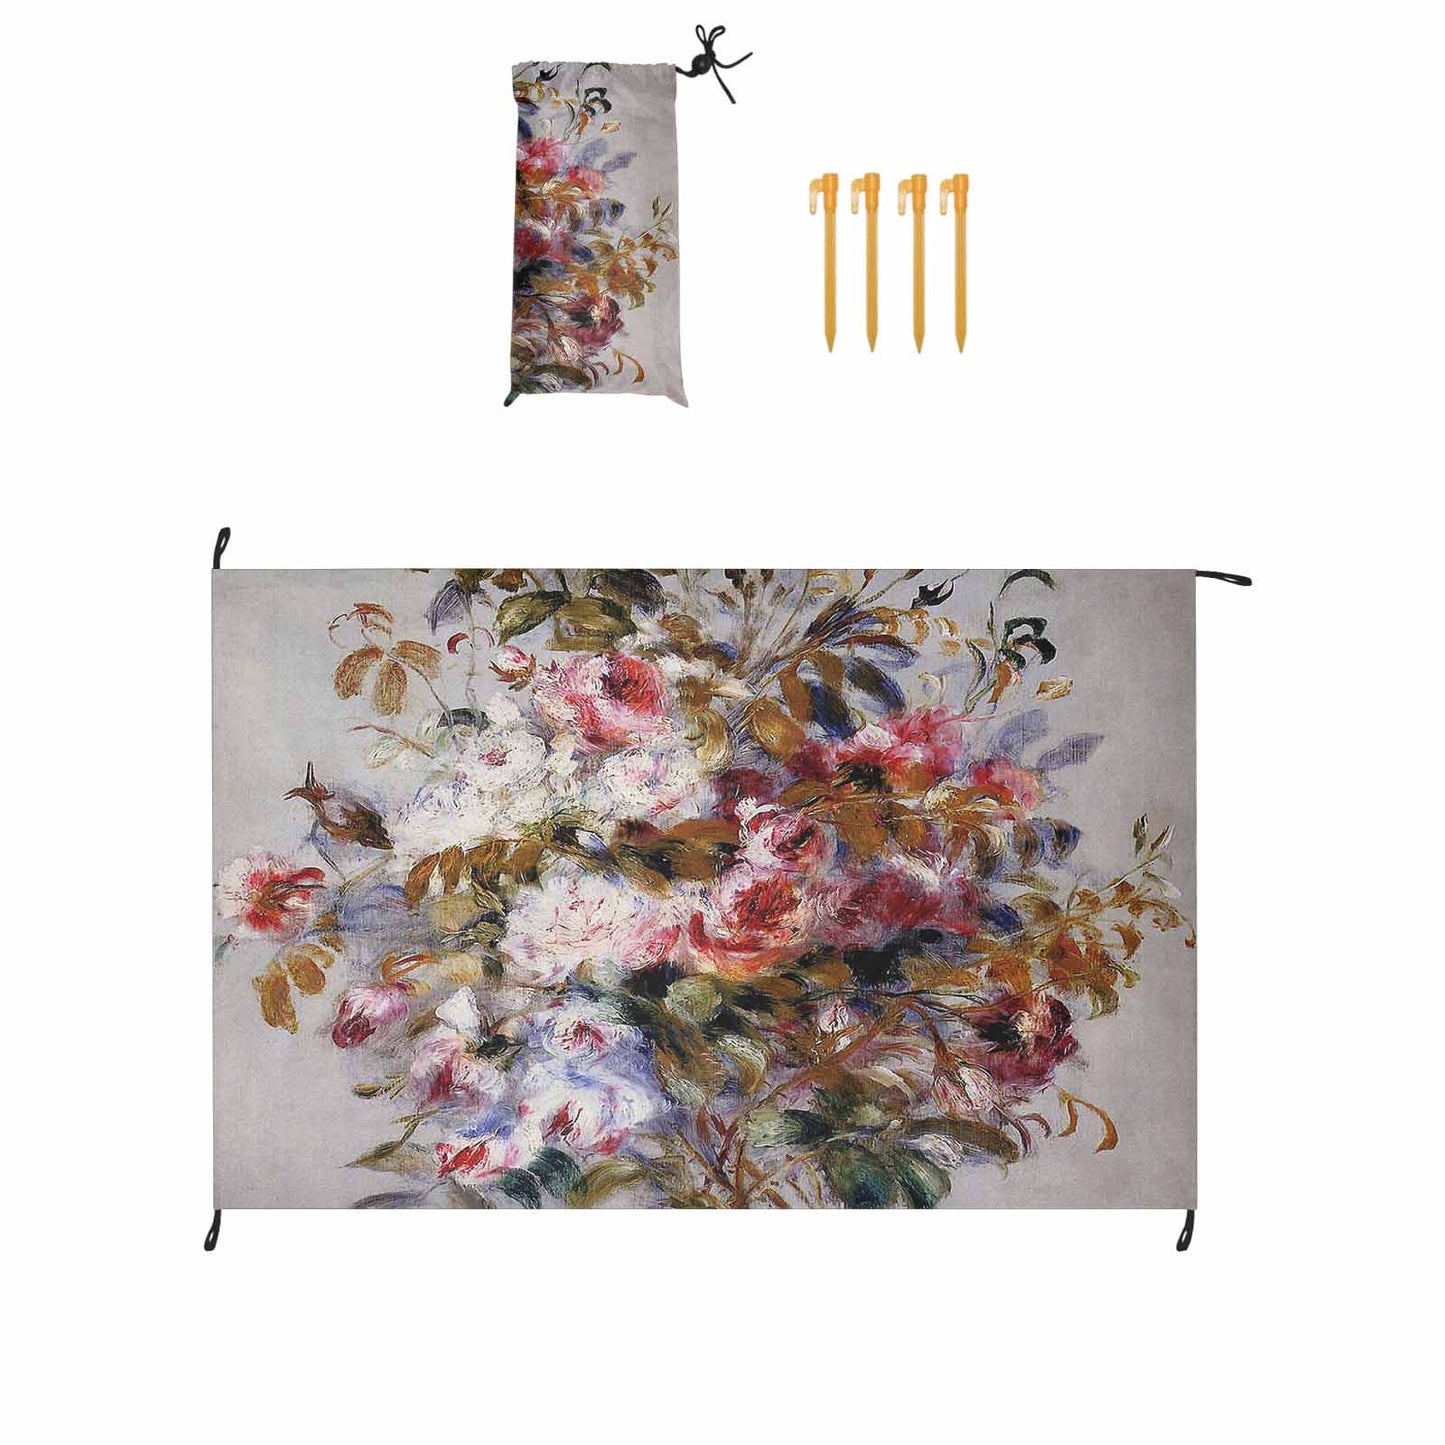 Vintage Floral waterproof picnic mat, 81 x 55in, Design 12